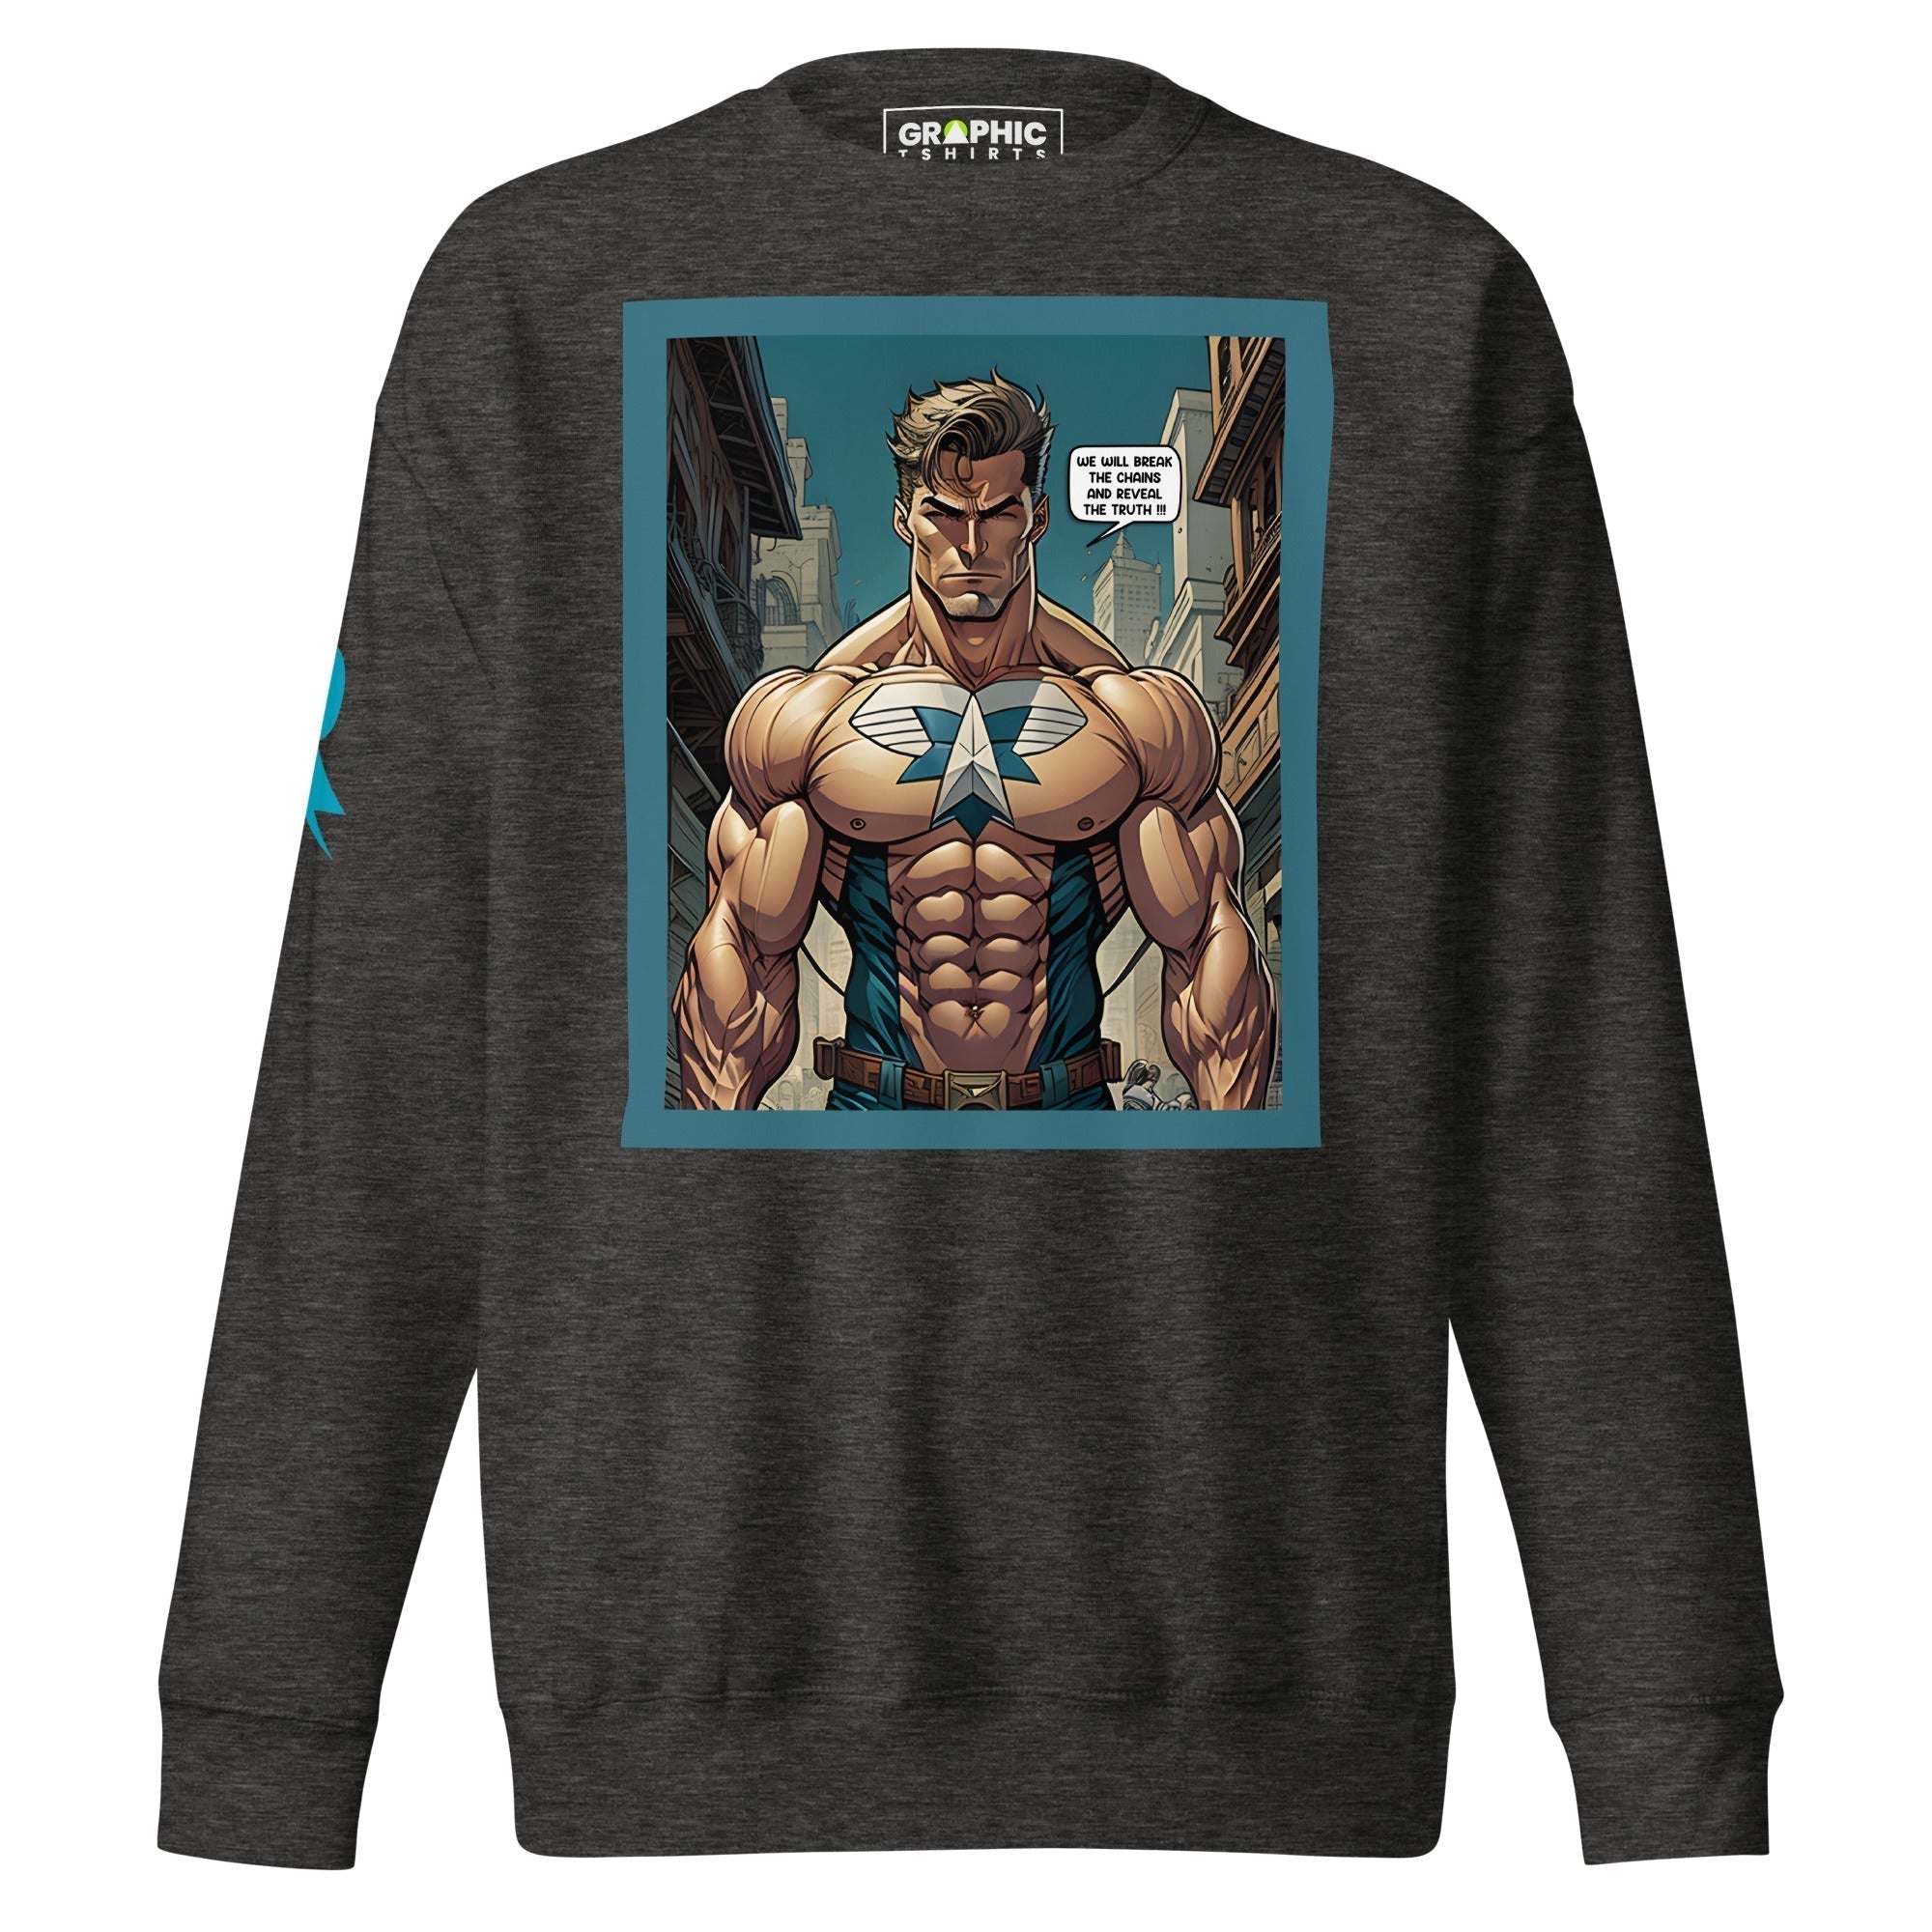 Unisex Premium Sweatshirt - Retribution: Heroes Unleashed v.63 - GRAPHIC T-SHIRTS